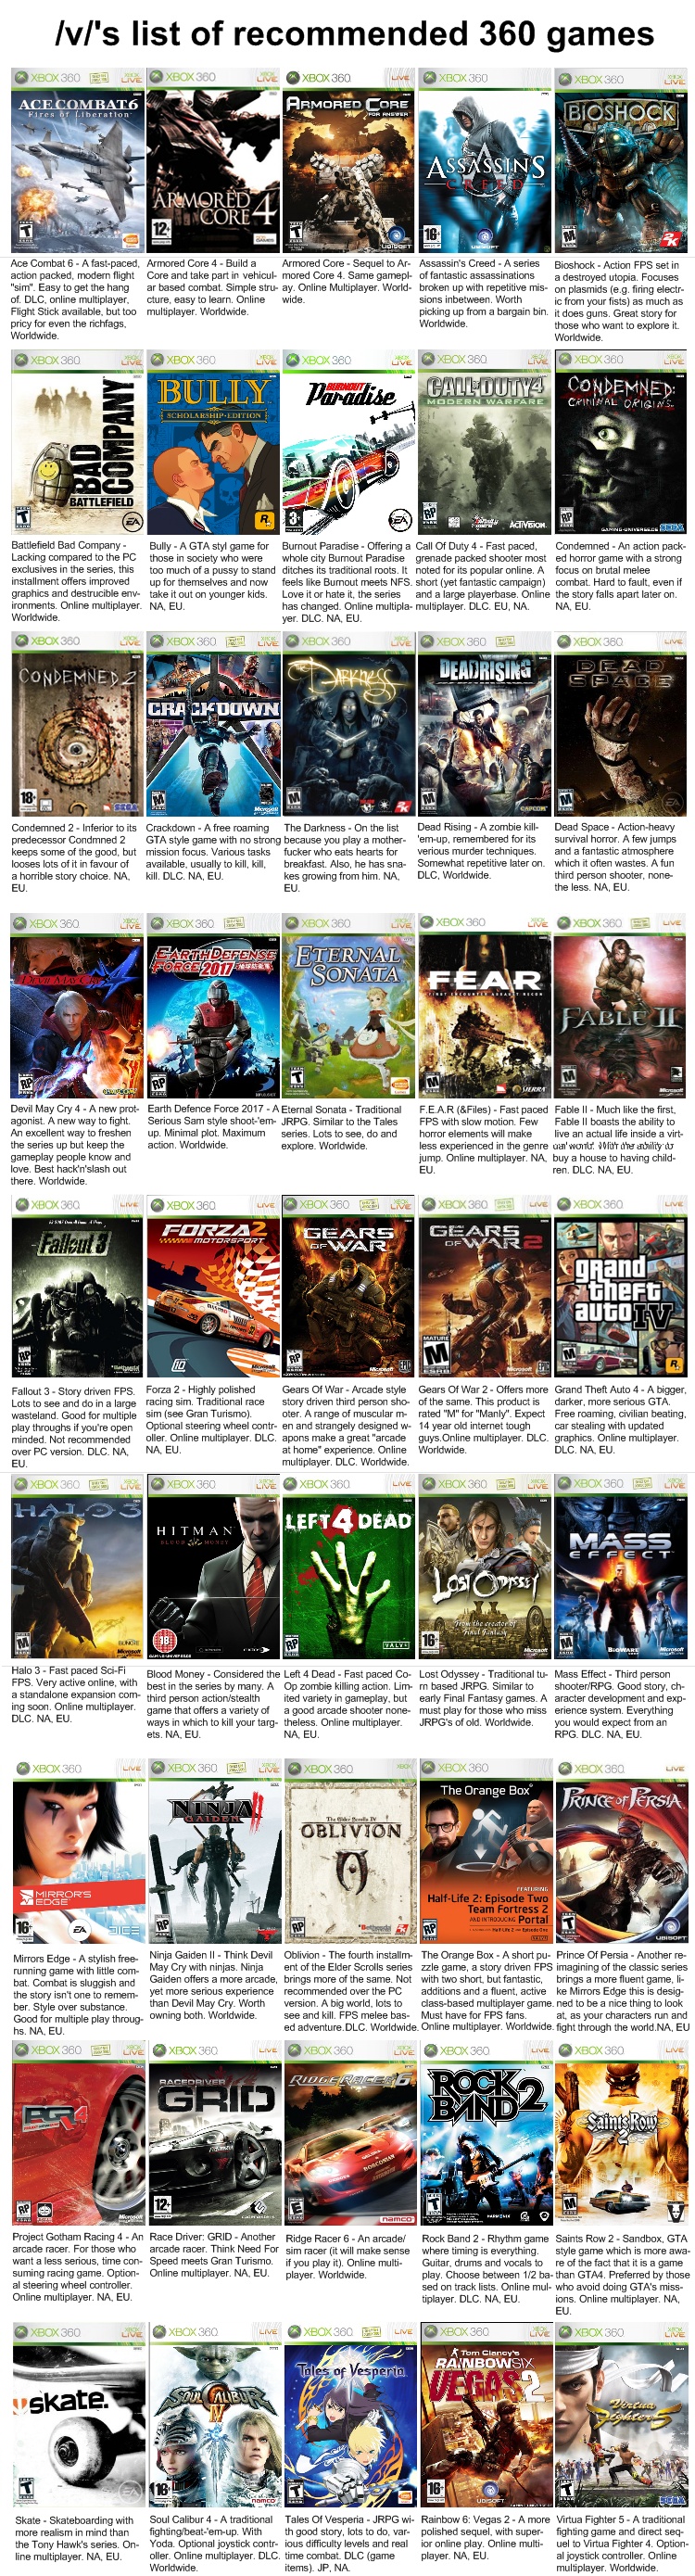 List of Xbox games - Wikipedia